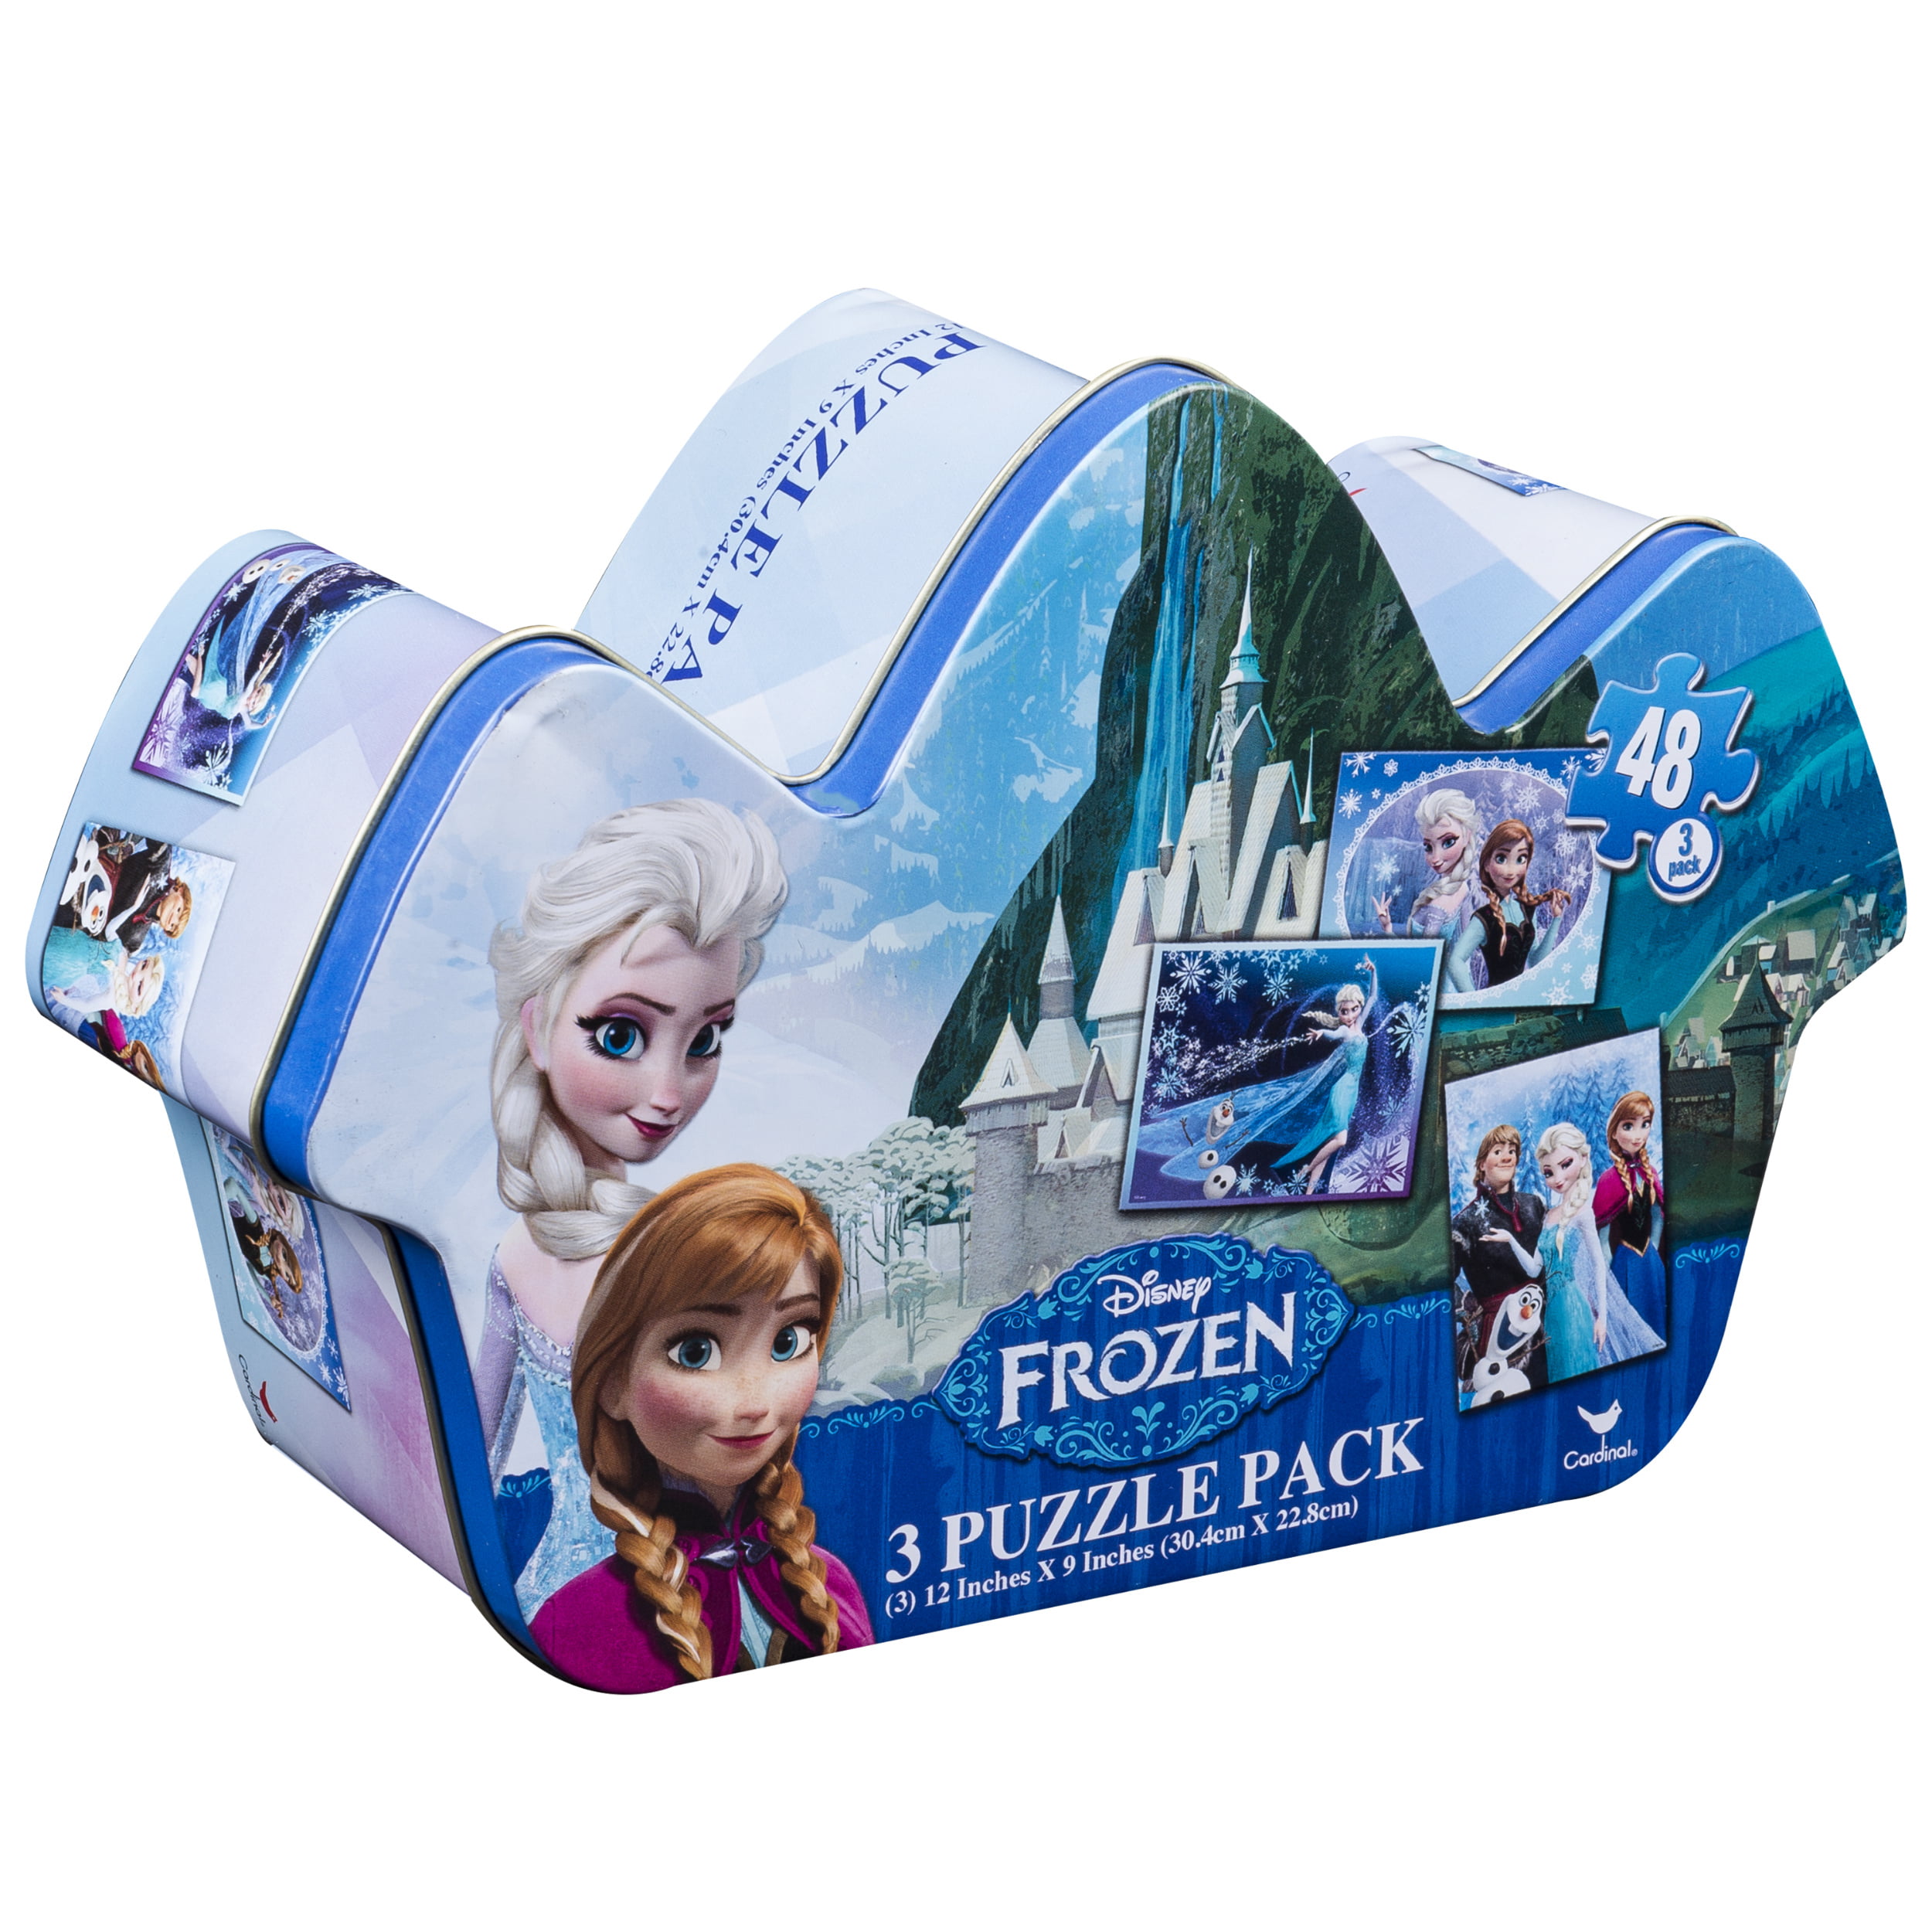 63 100 piece puzzles Christmas gift idea New Disney Frozen II 12-PuzzlePack  48 